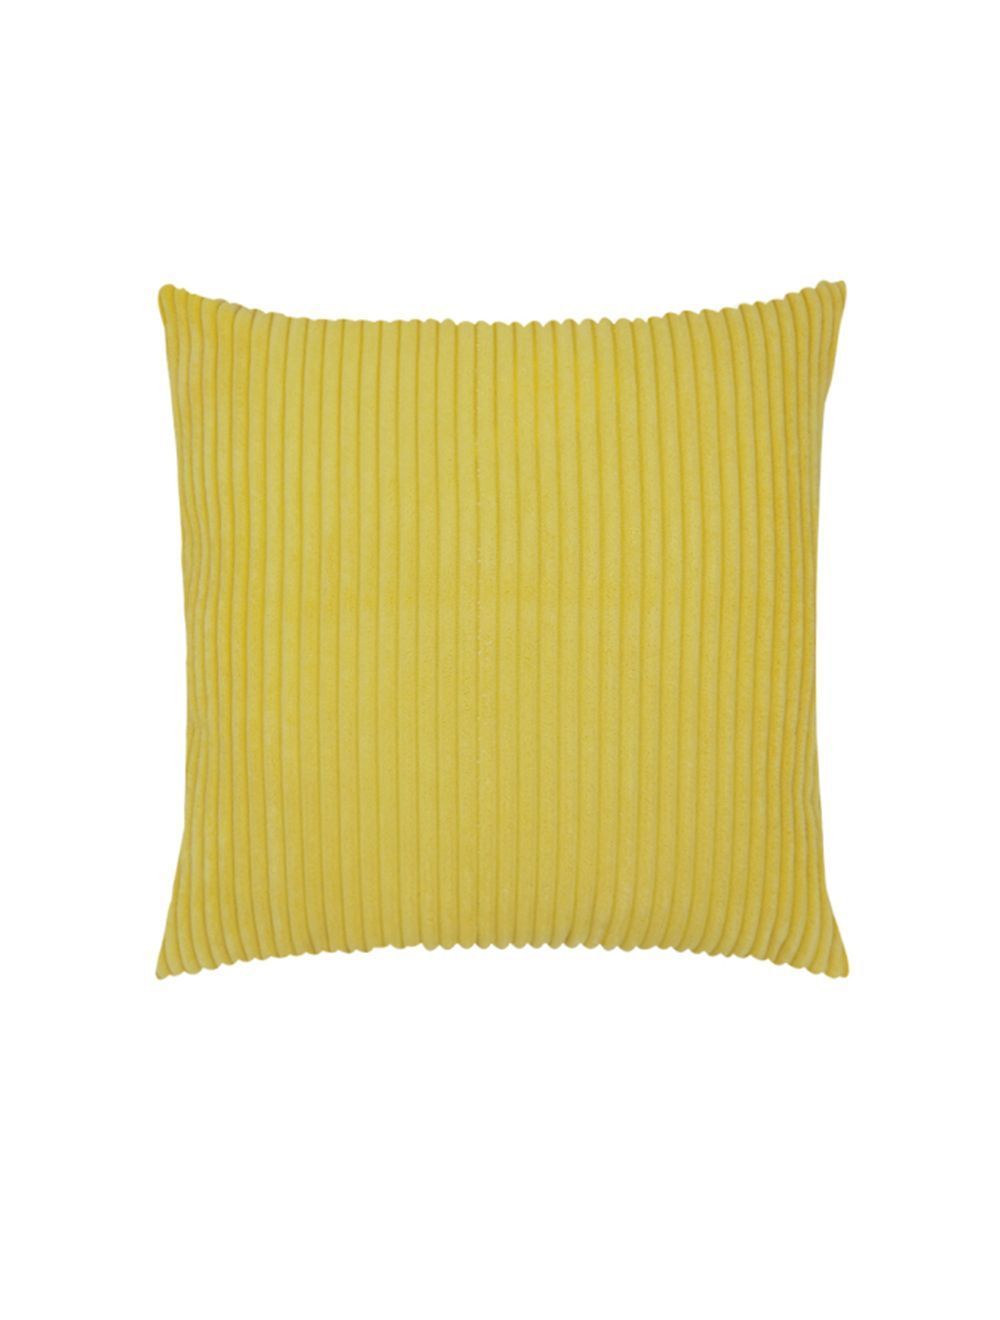 Rishahome Yellow Coloured Printed Cushion Cover 45x45 cm-9C134CN007